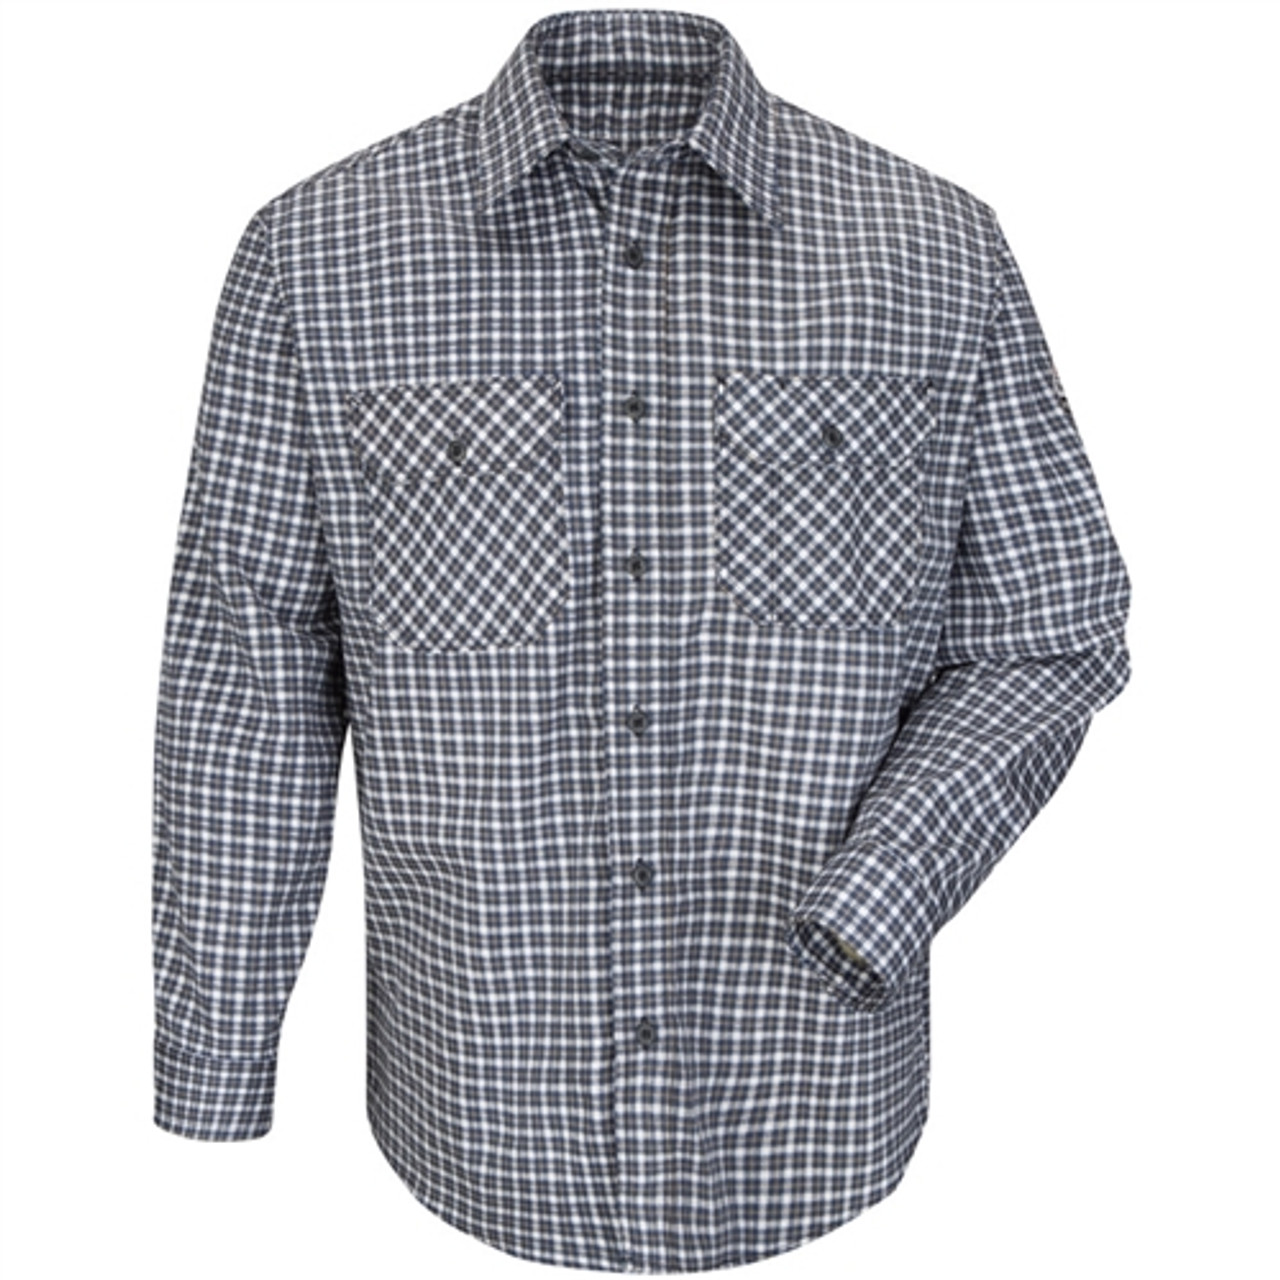 Bulwark Flame Resistant 7 oz Cotton Work Shirt with Sleeve Vent Small Khaki